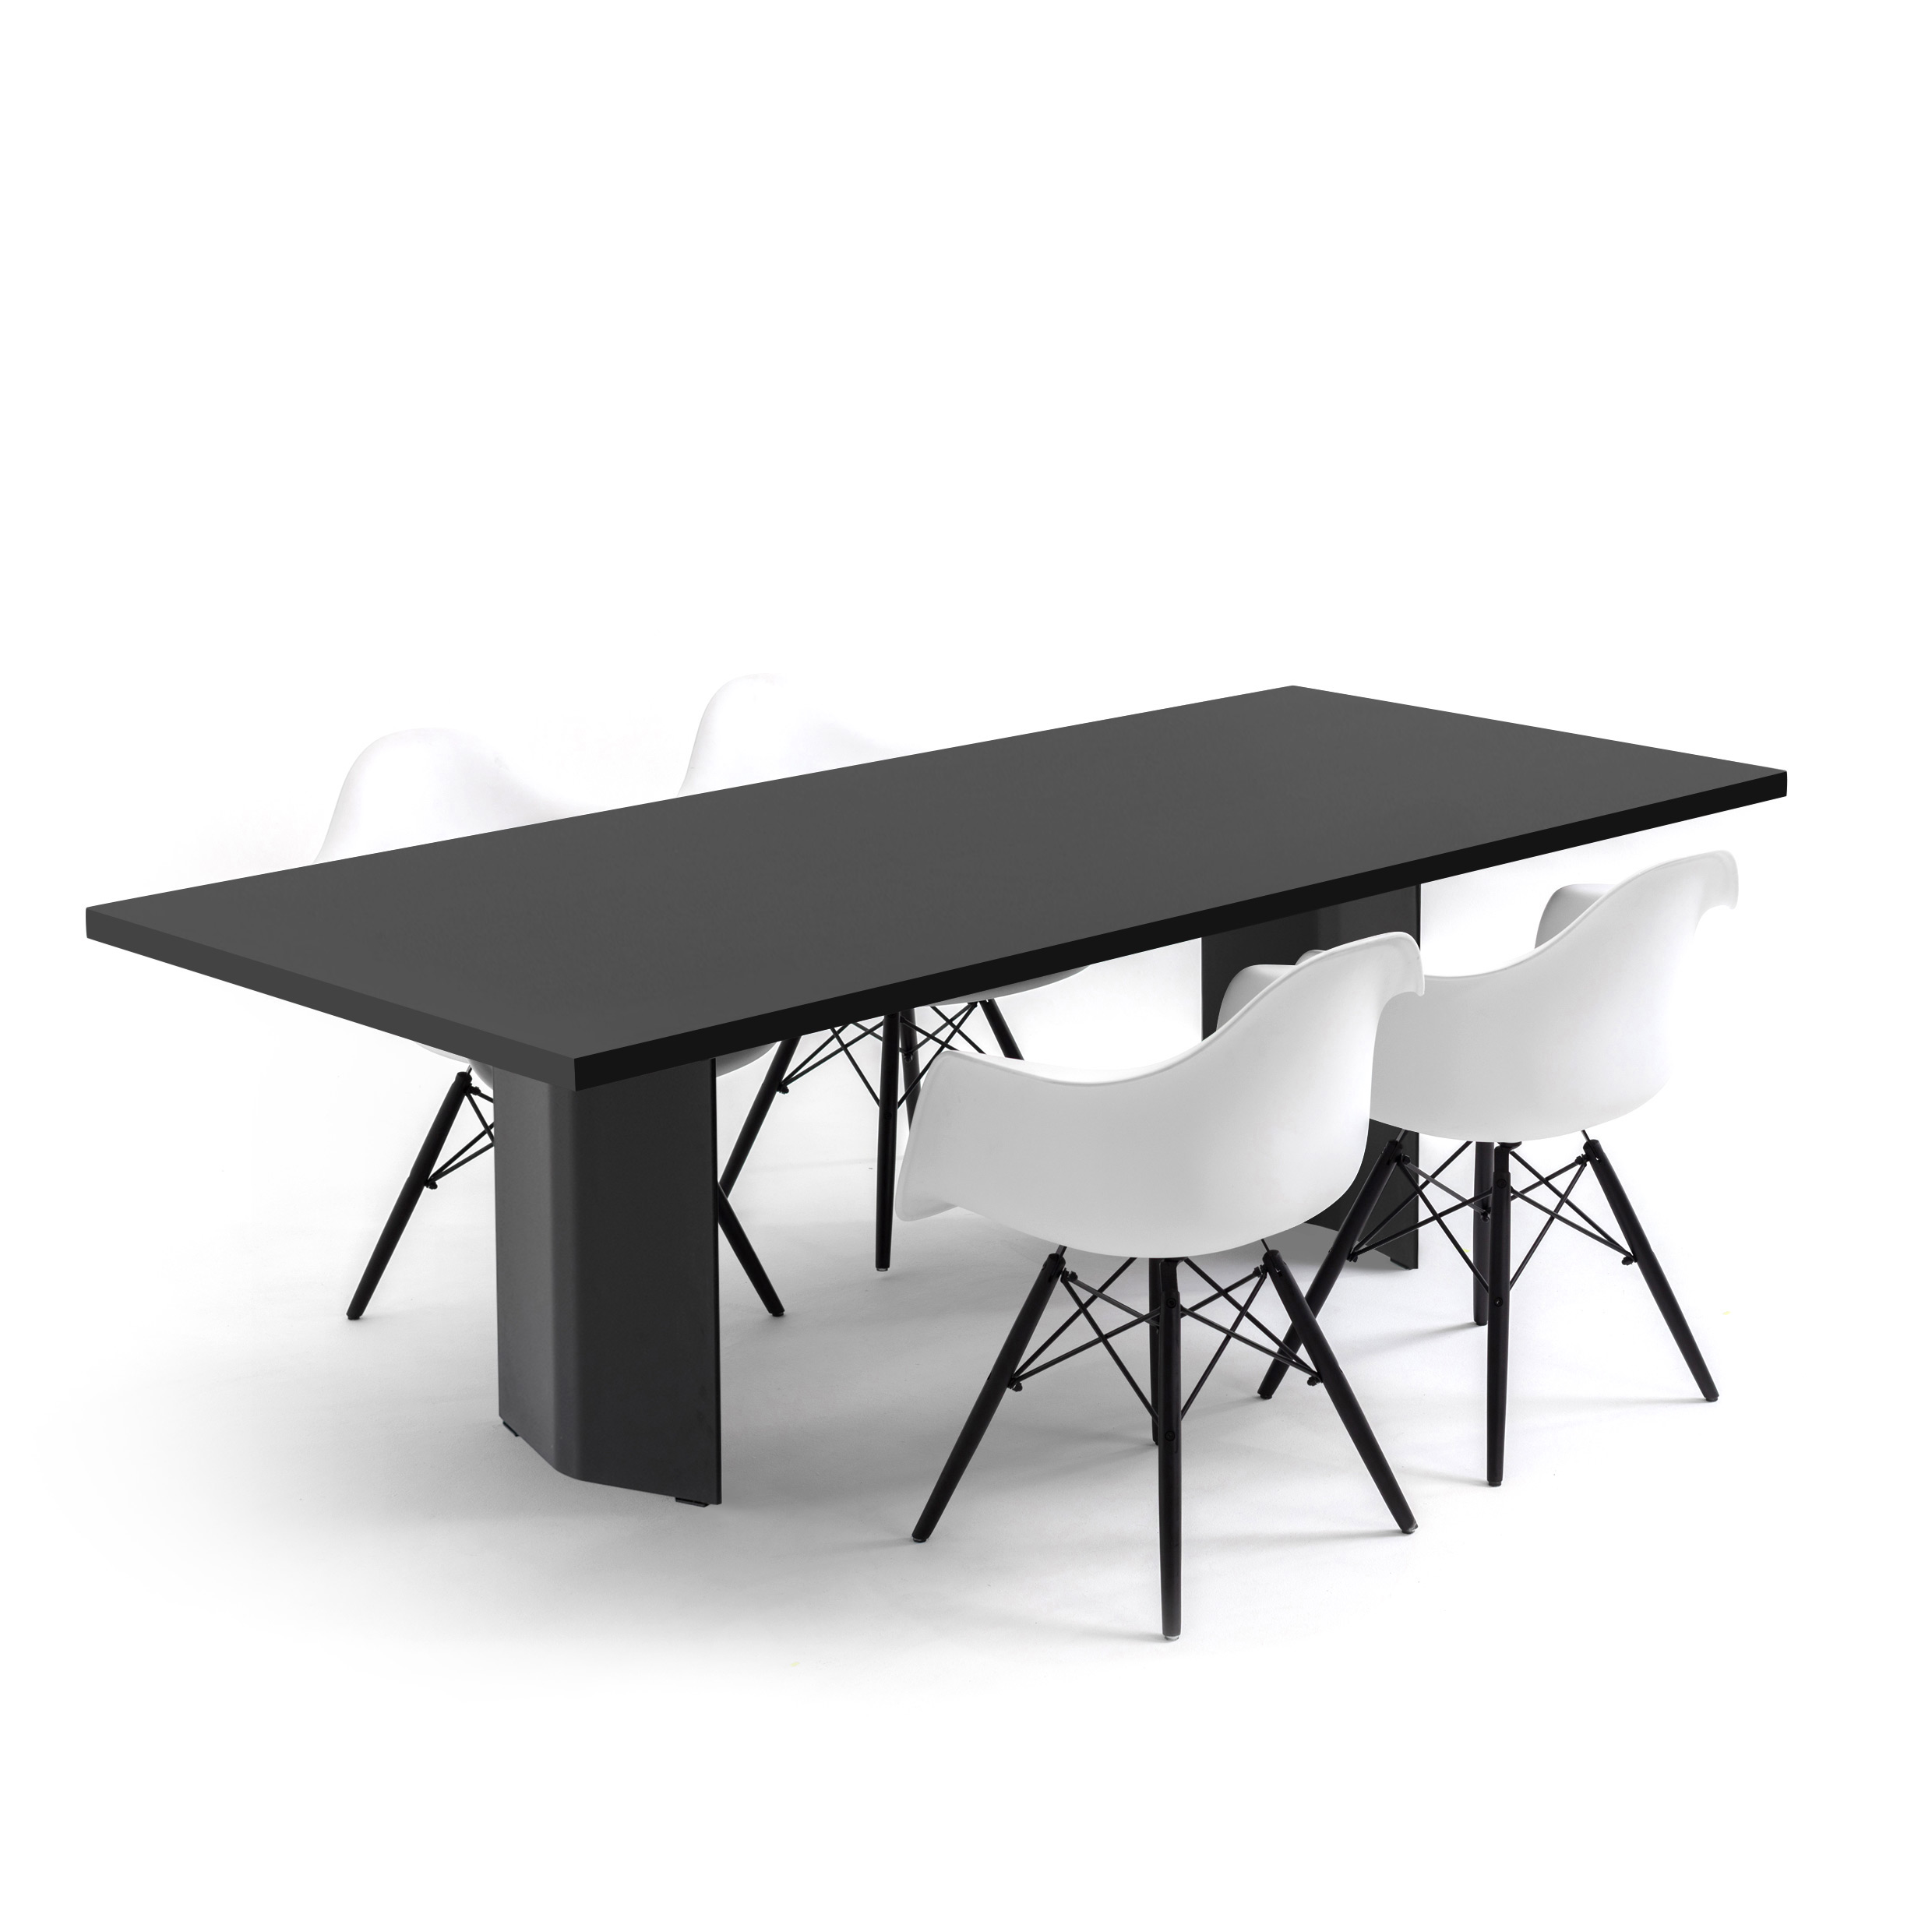 FORM EXCLUSIVE // KUNO - TABLE | FENIX | BLACK - BLACK - 260CM X 100CM X 4CM - SINGLE BLACK